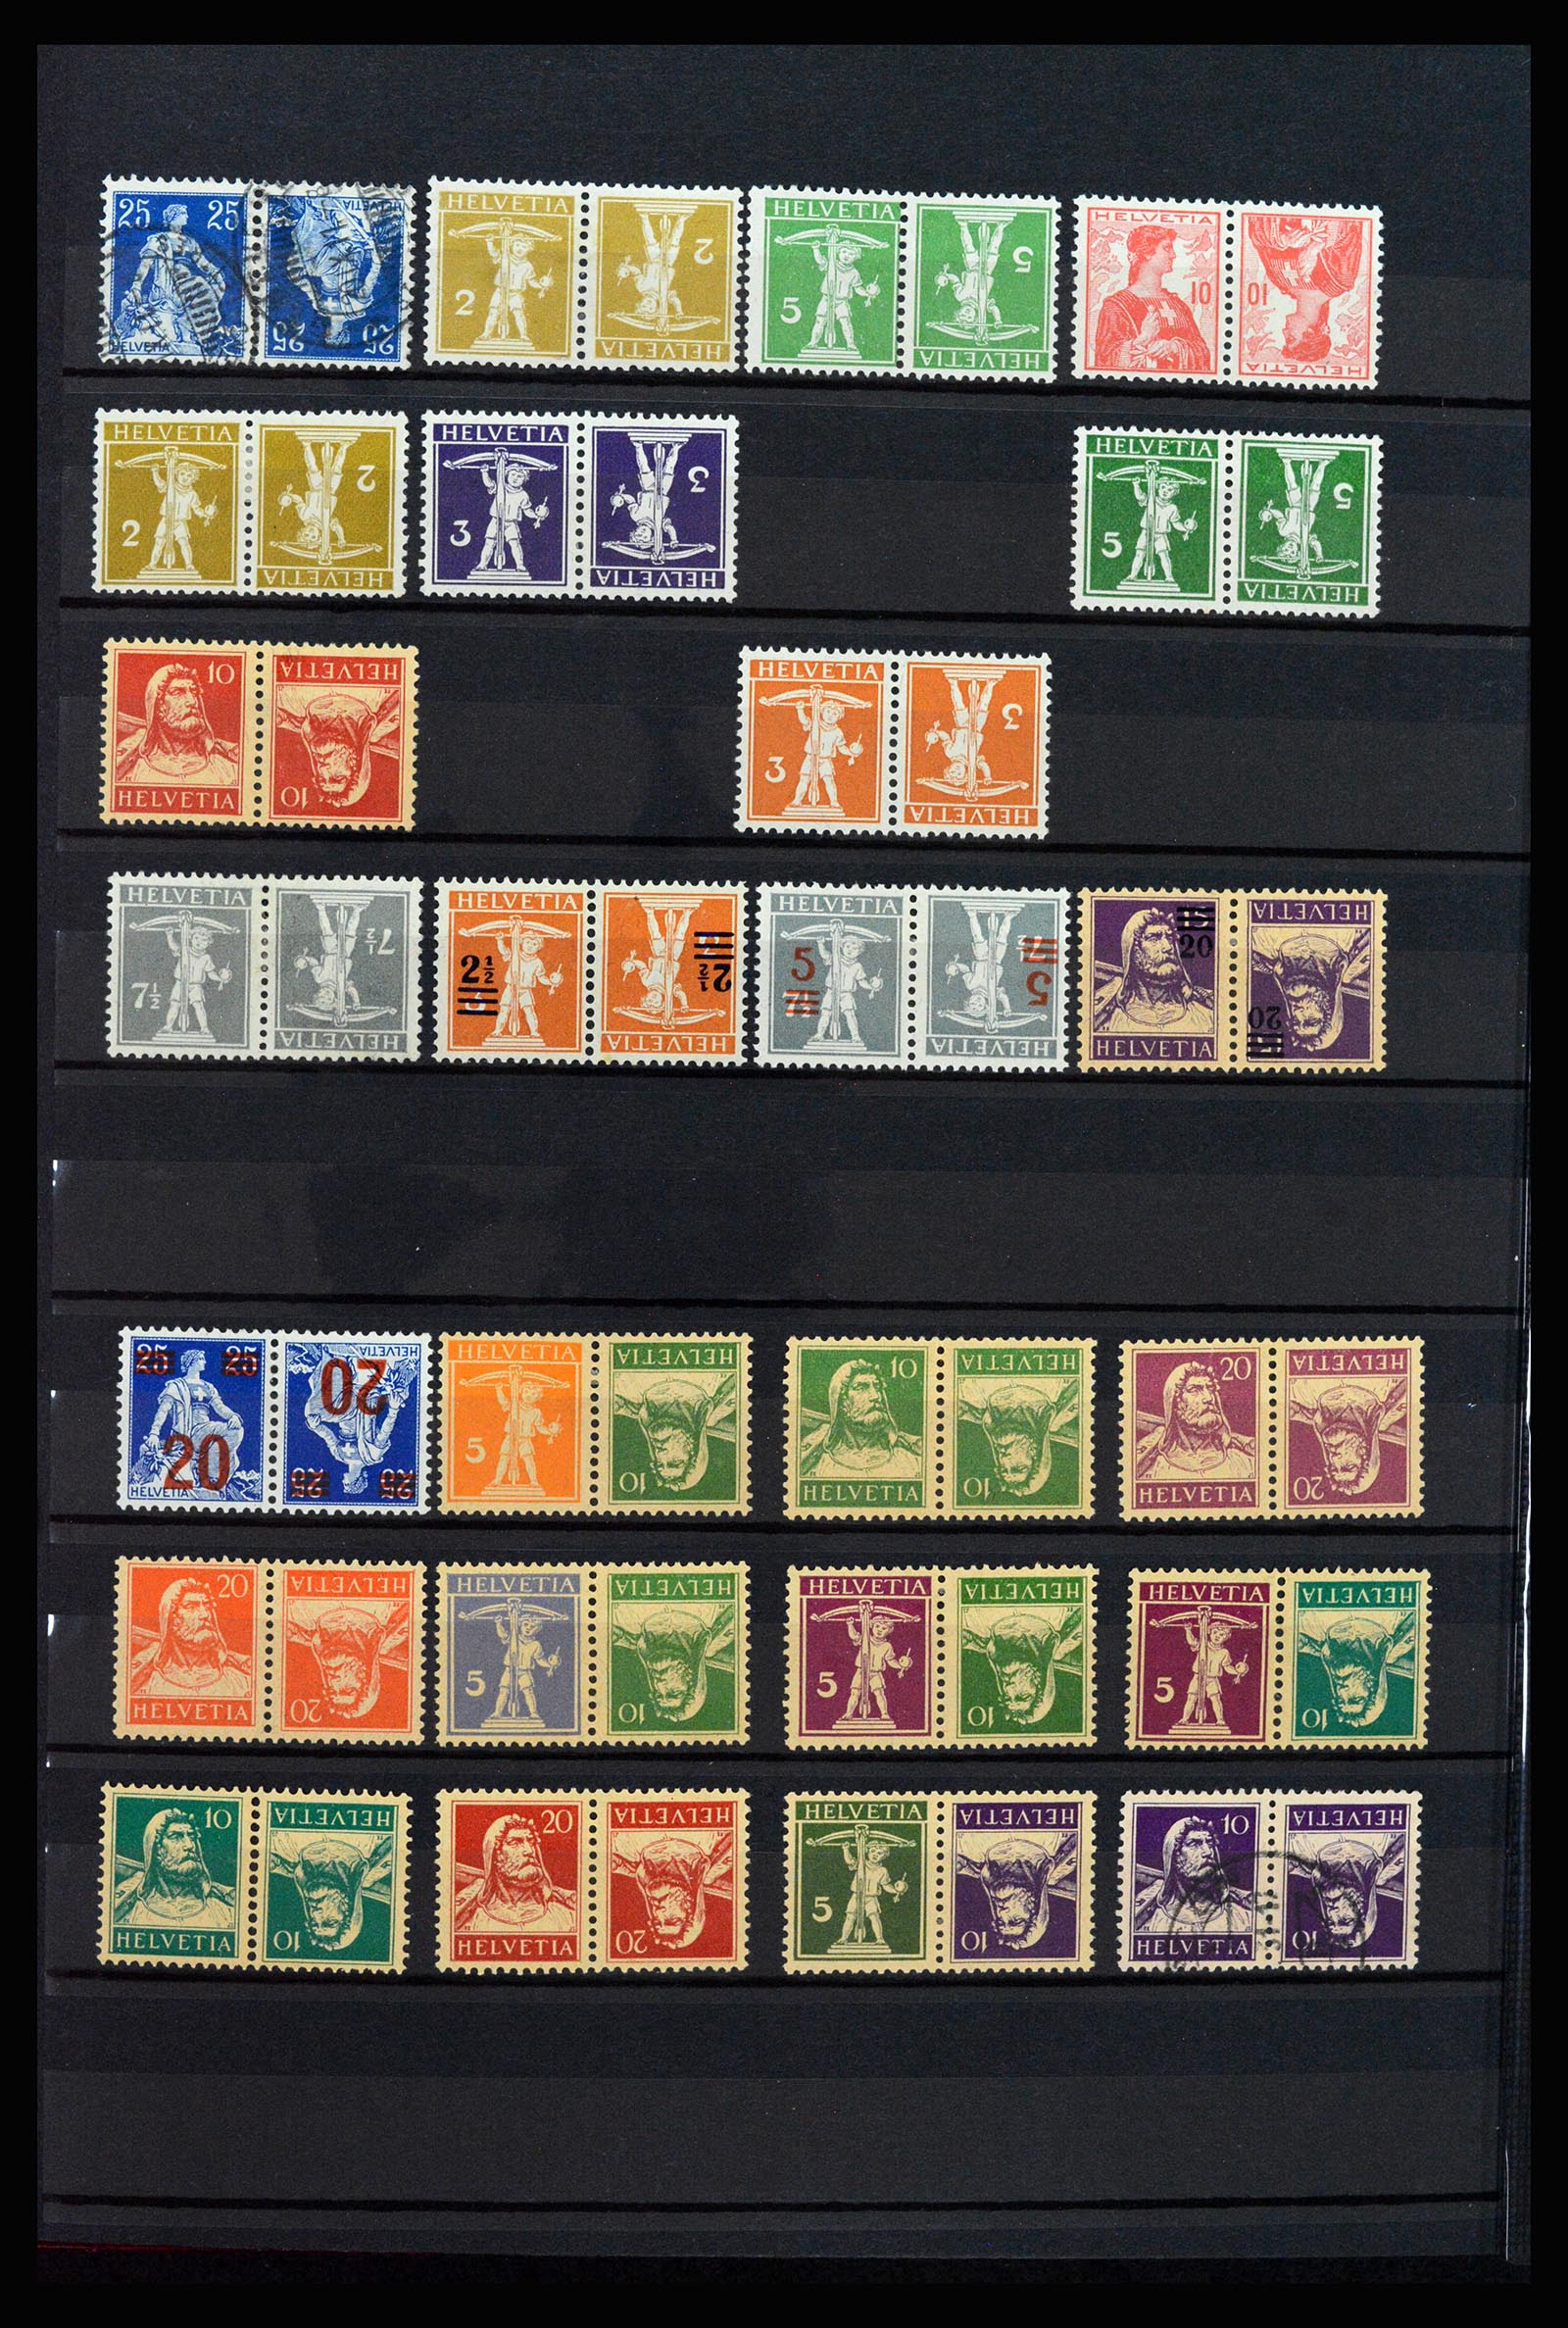 37225 168 - Stamp collection 37225 Switzerland 1854-2020.